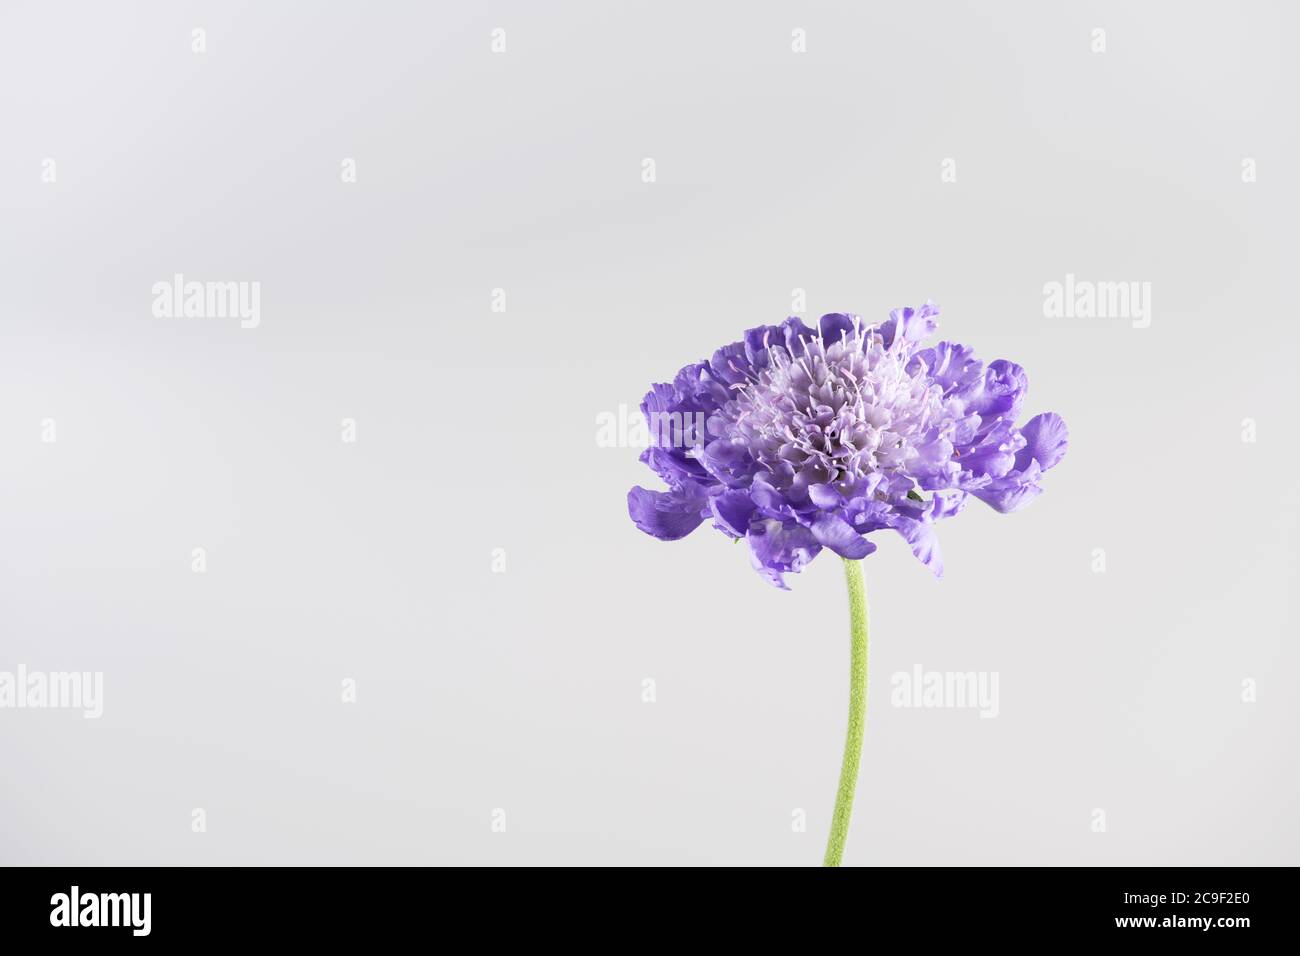 Single blue Scabious flower against a plain white background Stock Photo